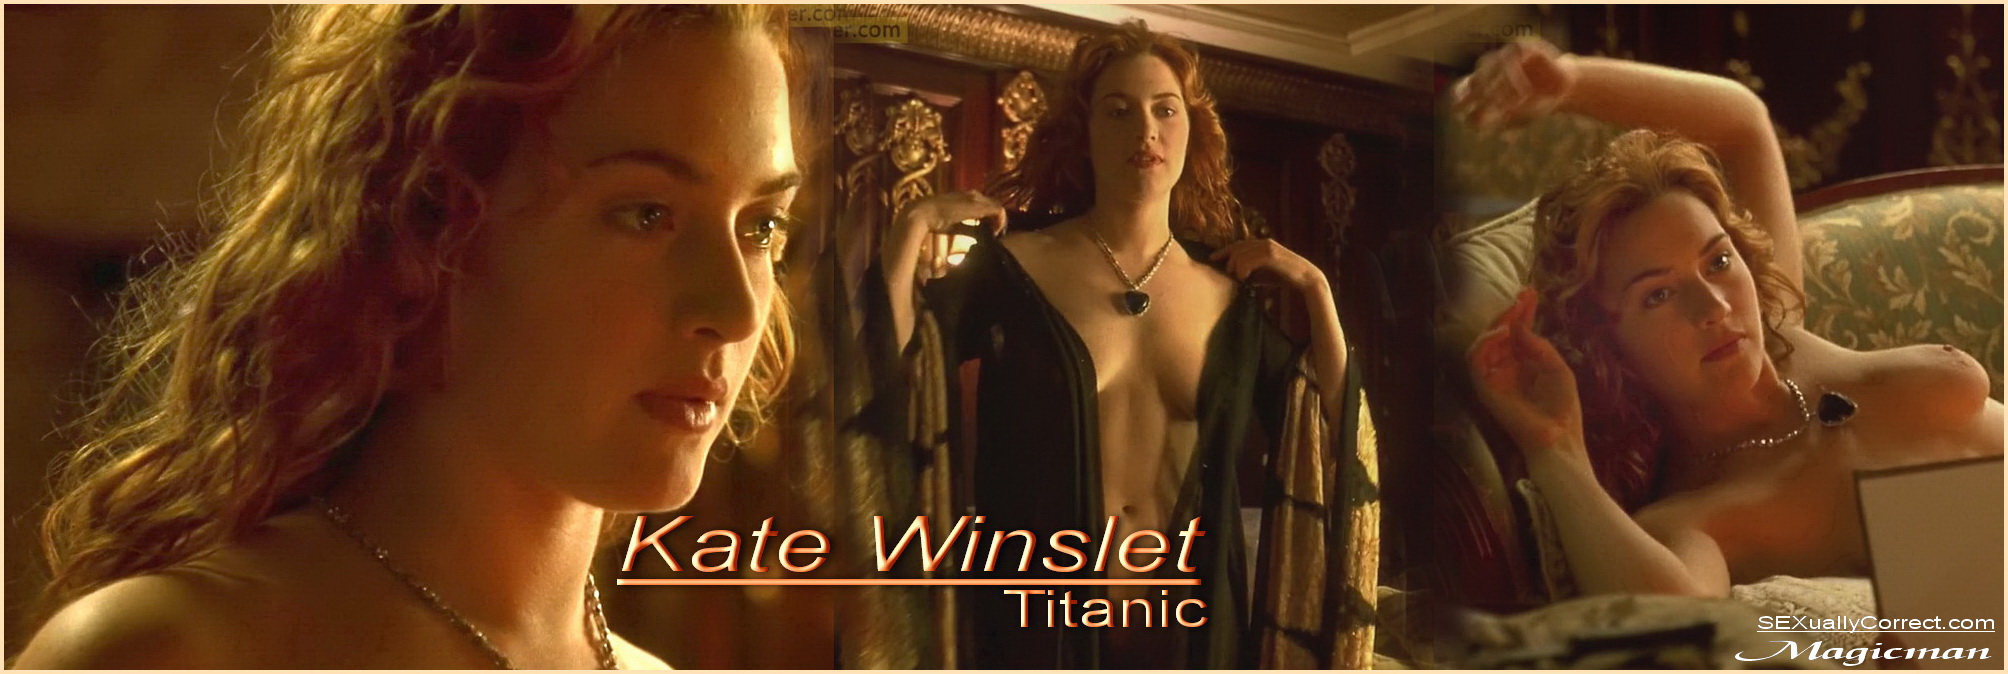 SexuallyCorrect-KateWinslet-TitanicXhd1080.jpg